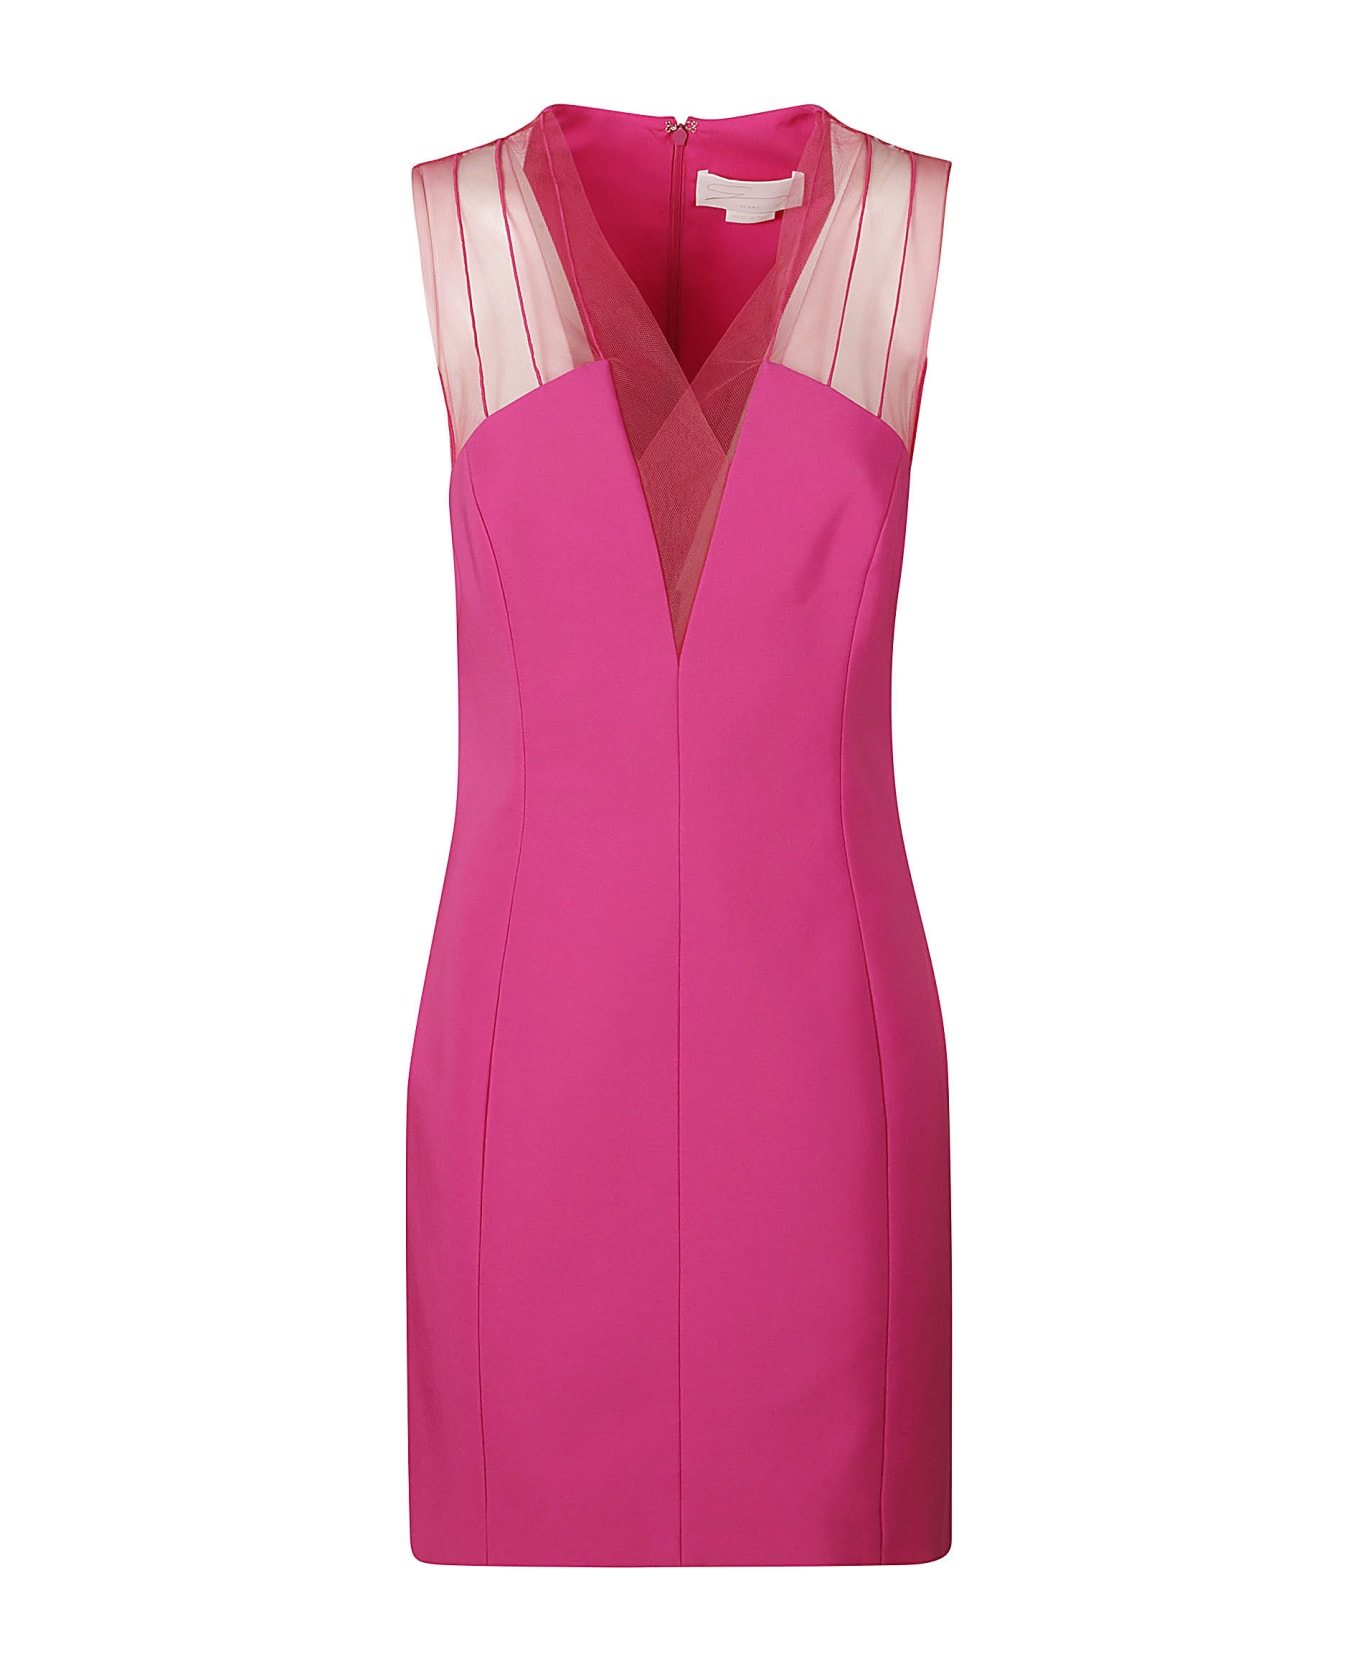 Genny Rear Zip Lace Paneled Sleeveless Dress - FUXIA